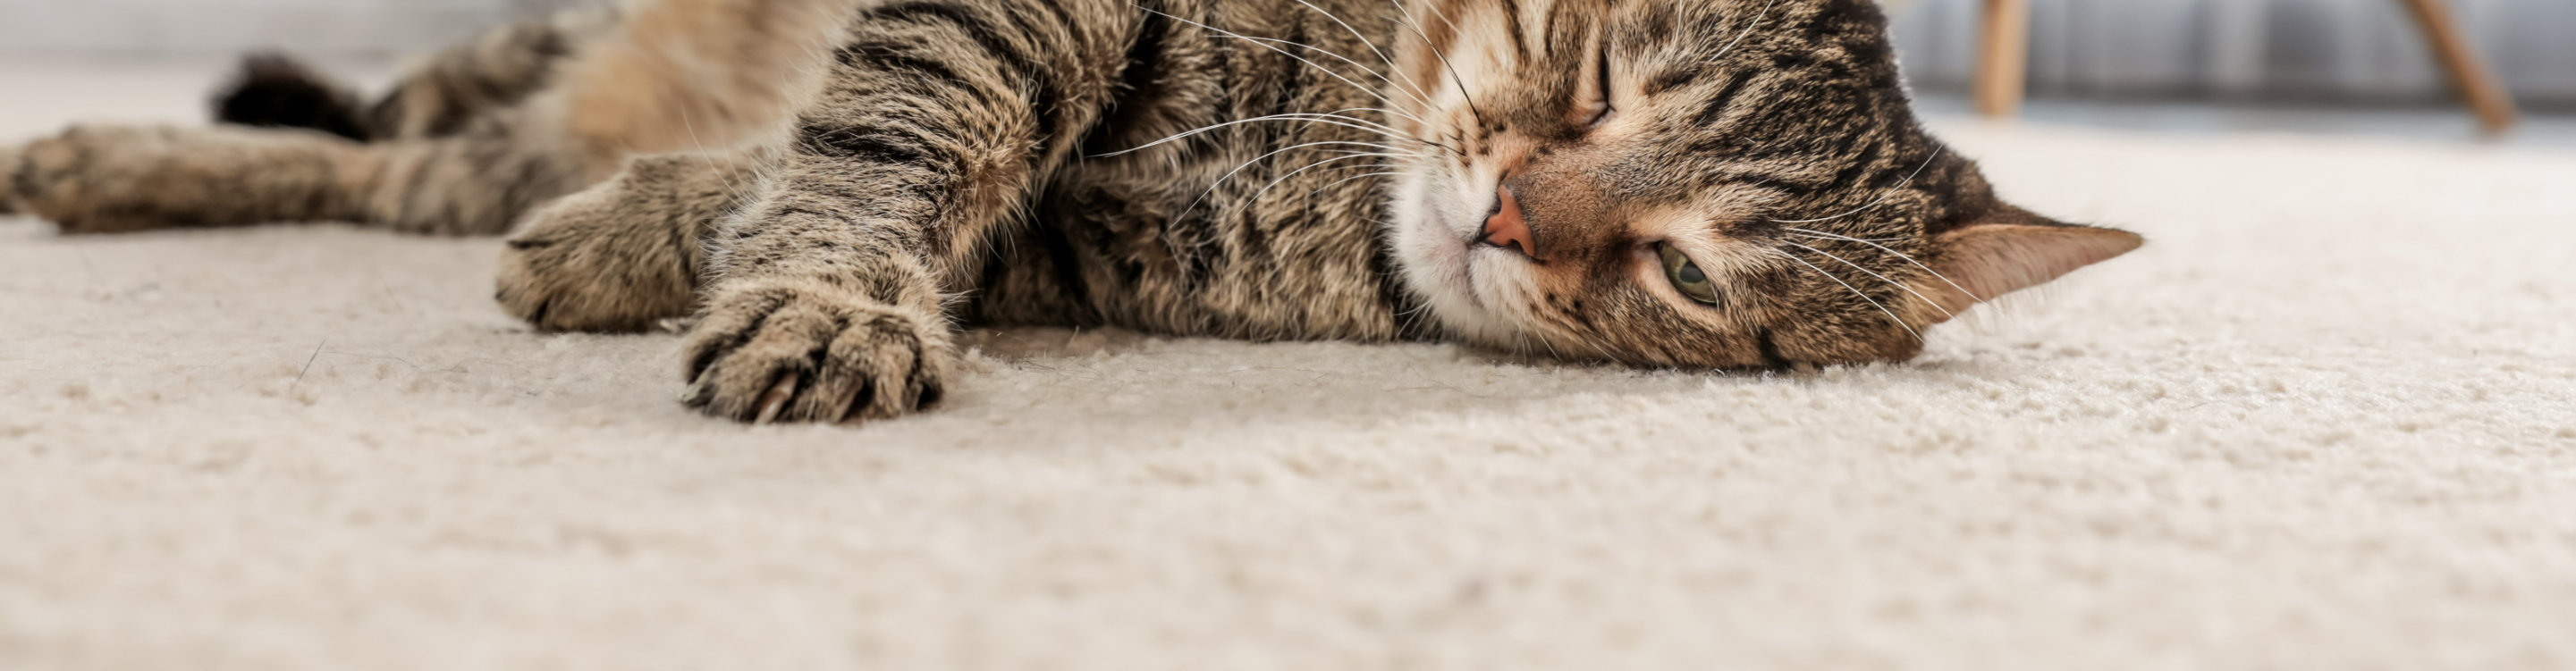 Cat laying on Carpet